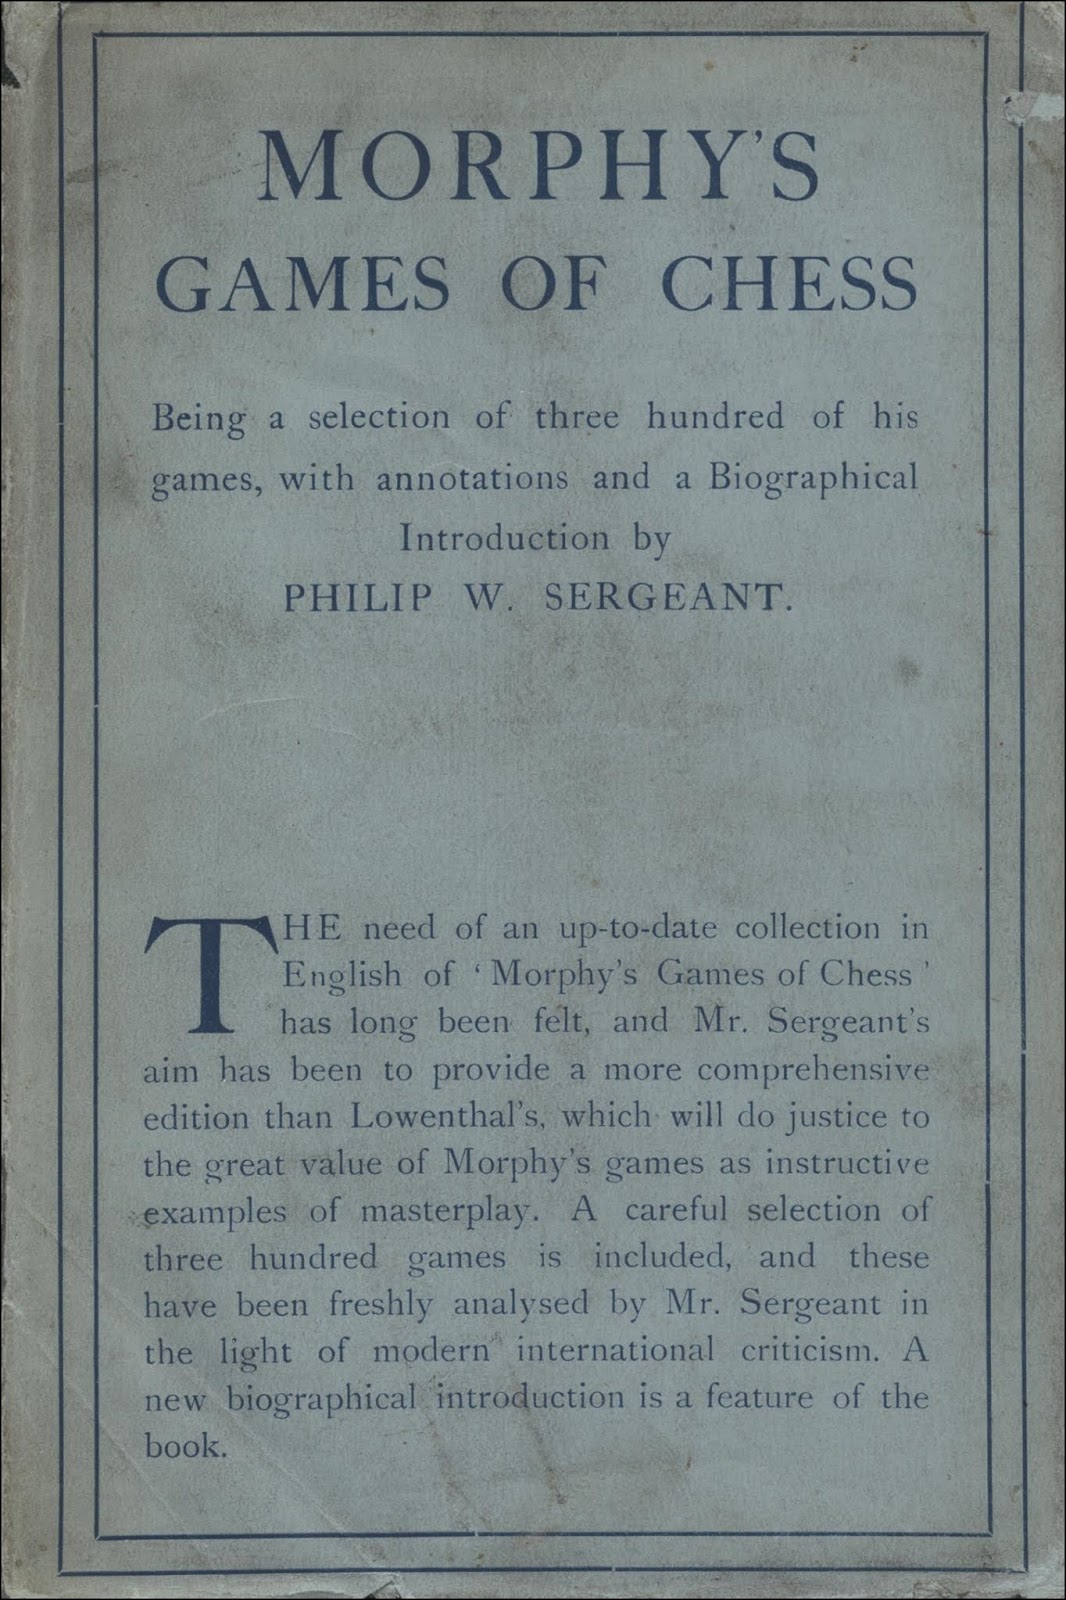 Alexander Alekhine Biography – Maroon Chess